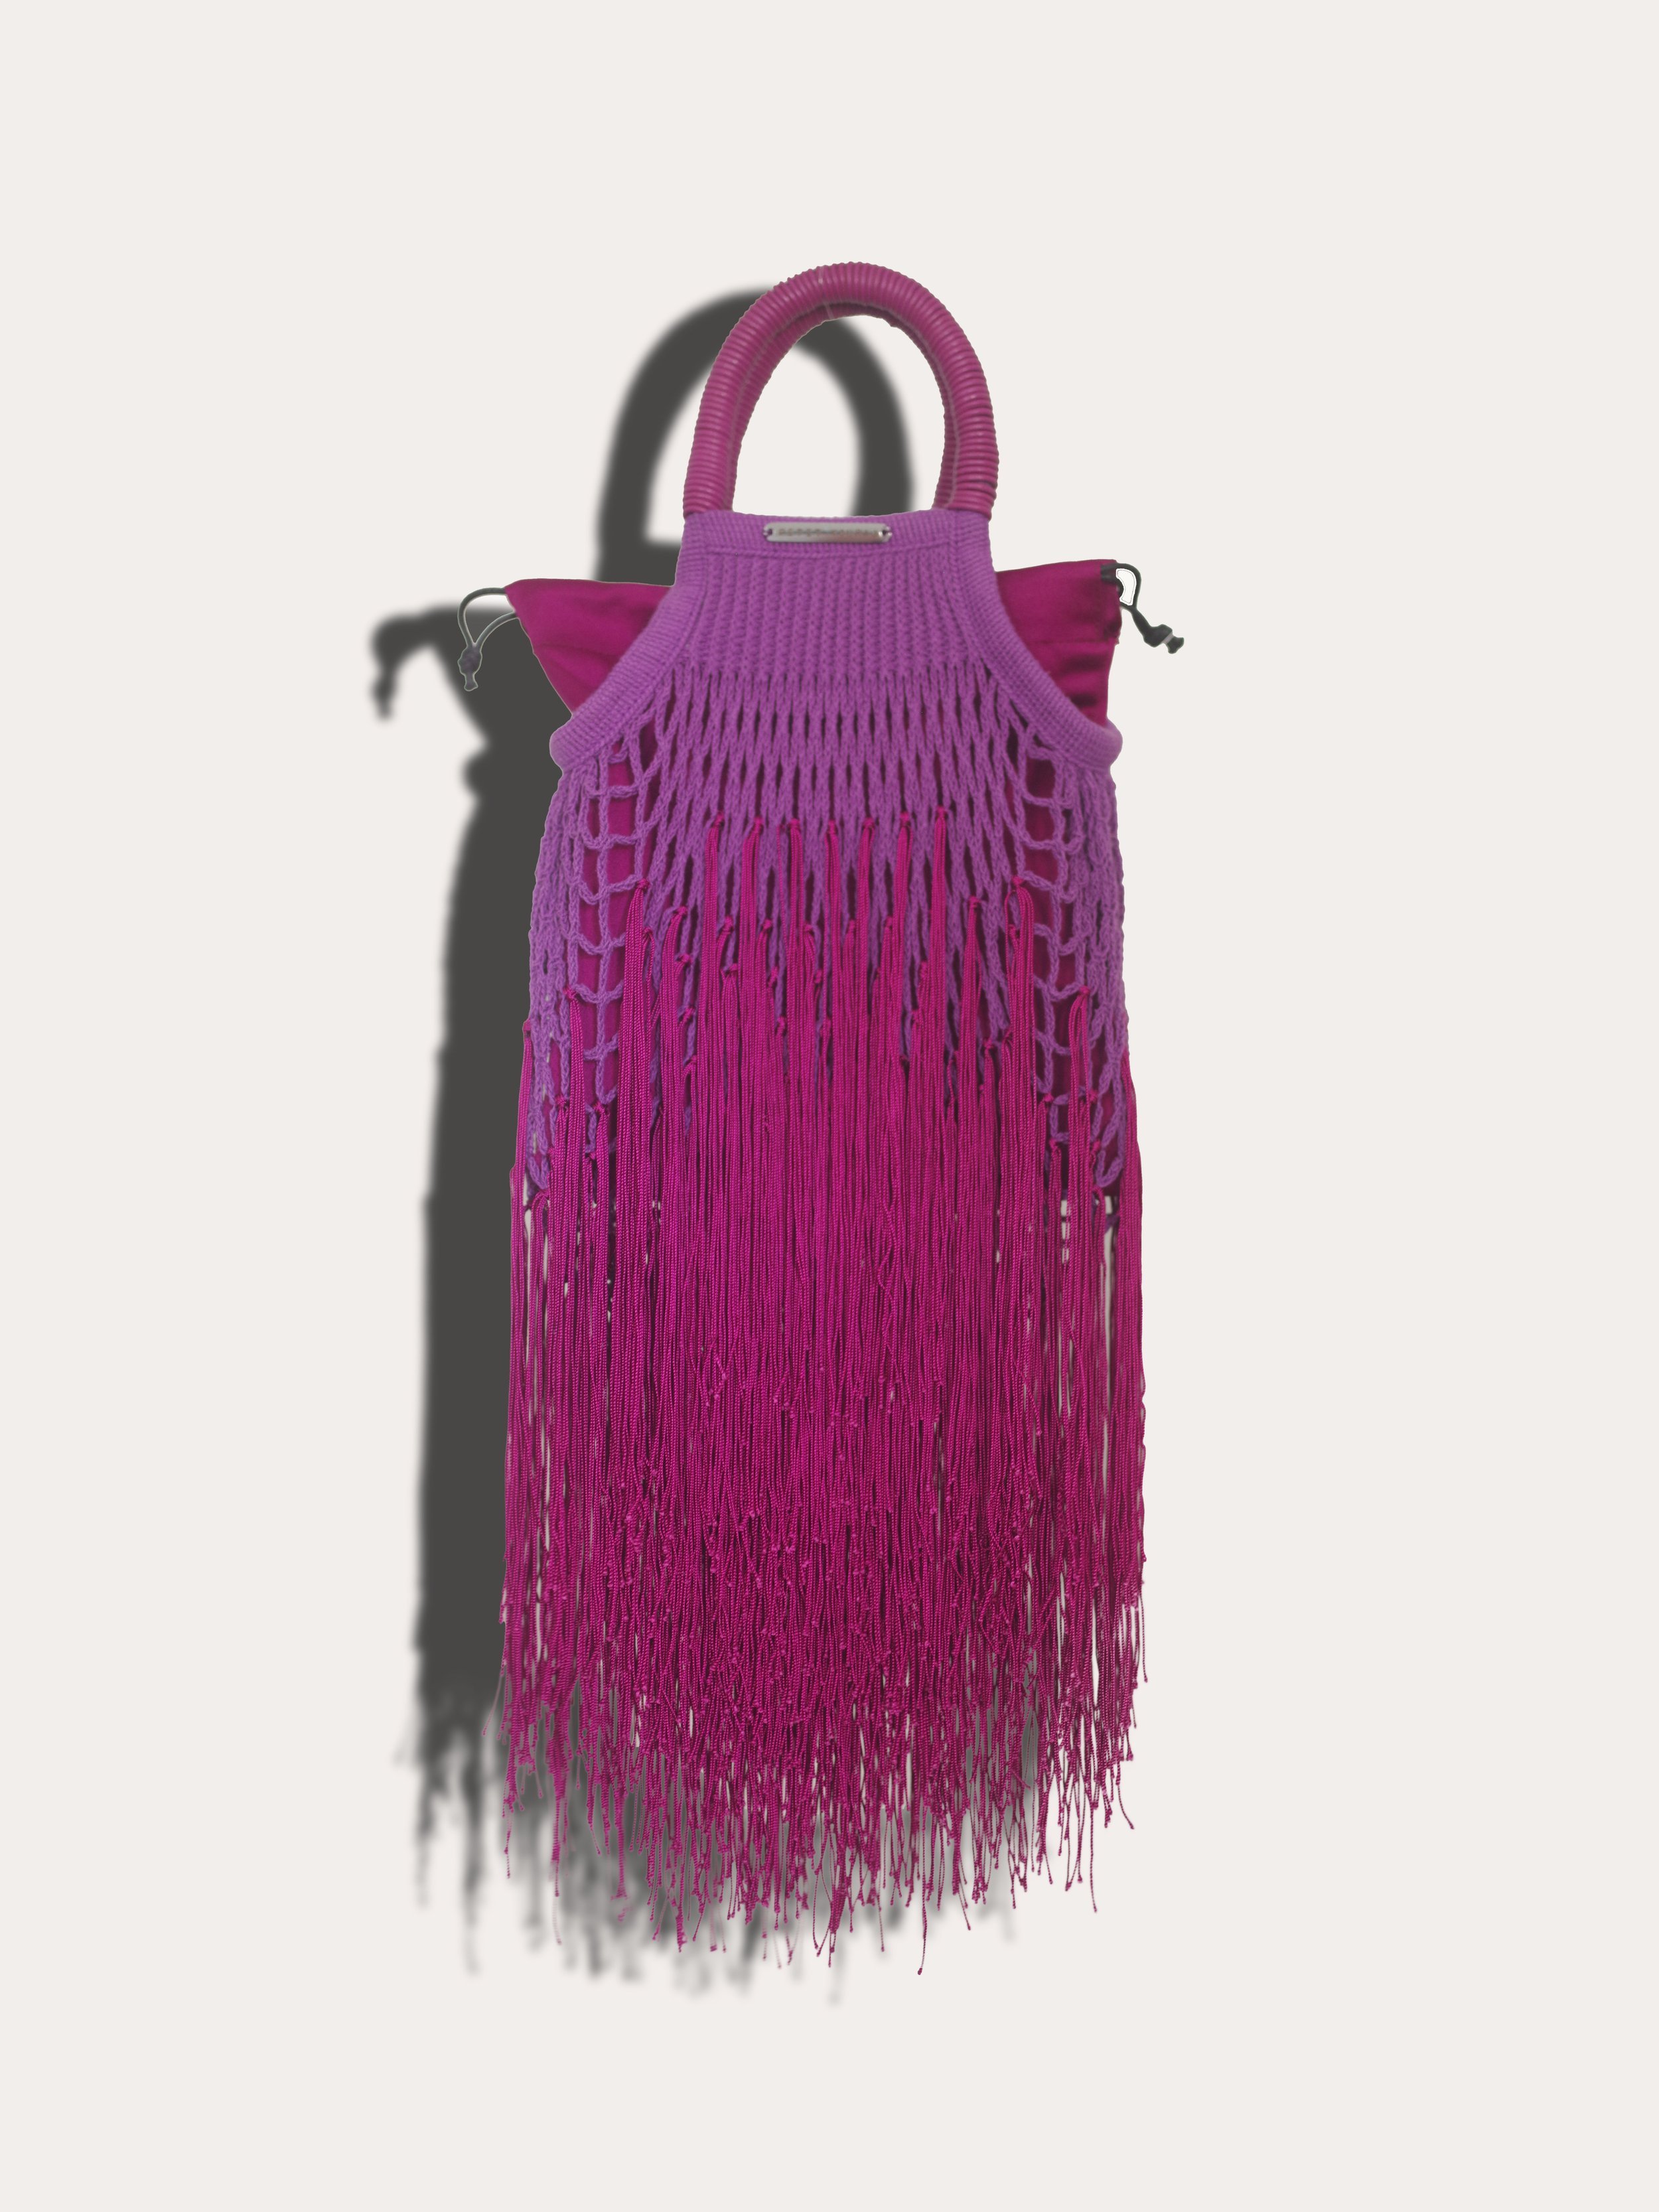 PETIT KOURAJ - Luxury Handmade Bag Inspired by Haiti